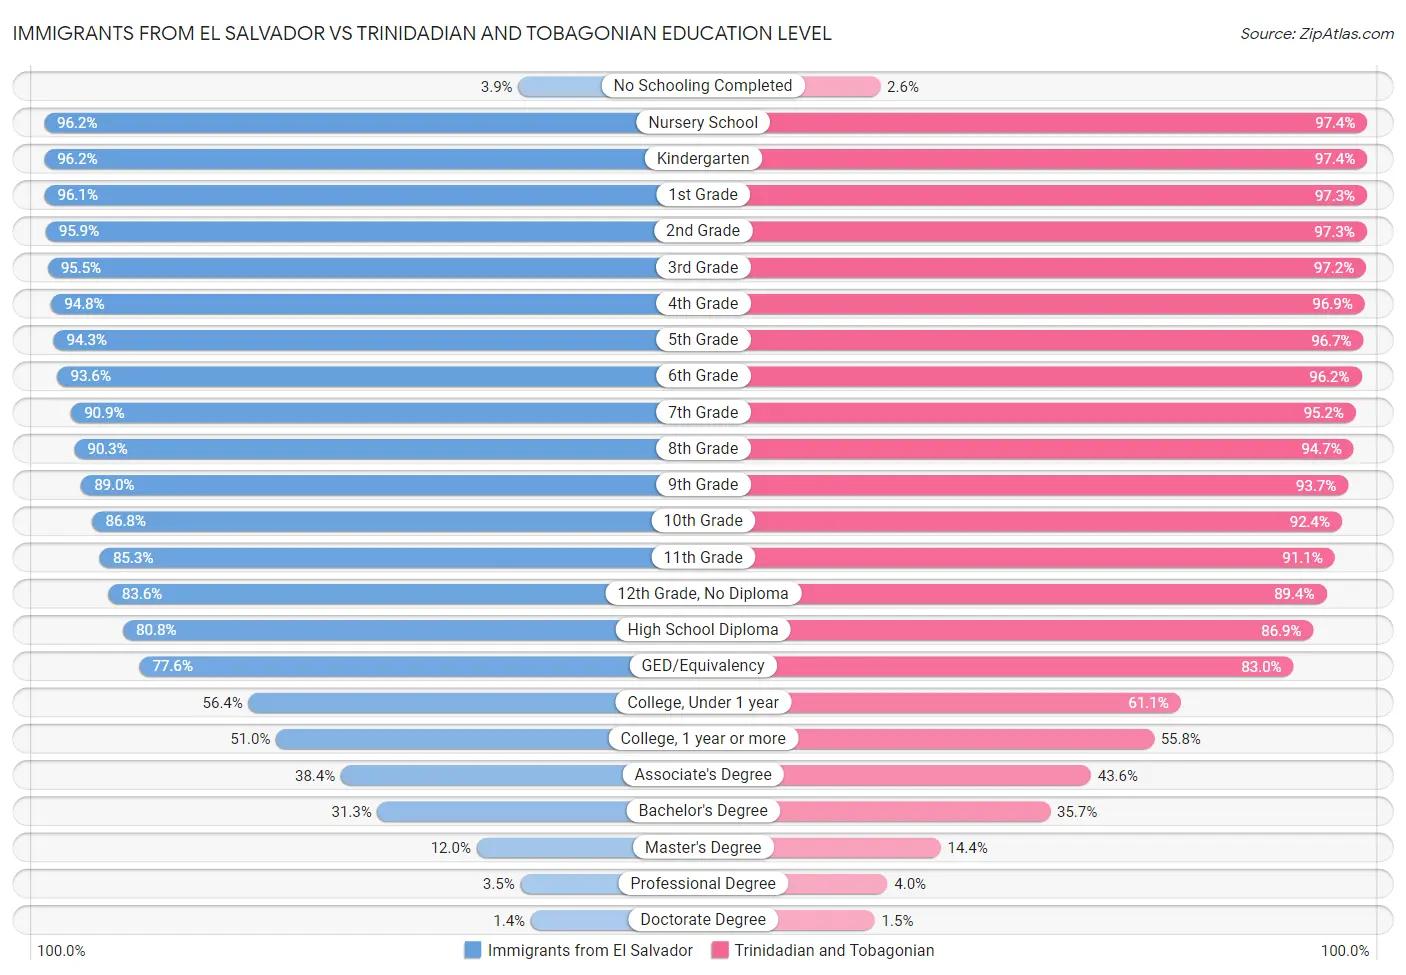 Immigrants from El Salvador vs Trinidadian and Tobagonian Education Level